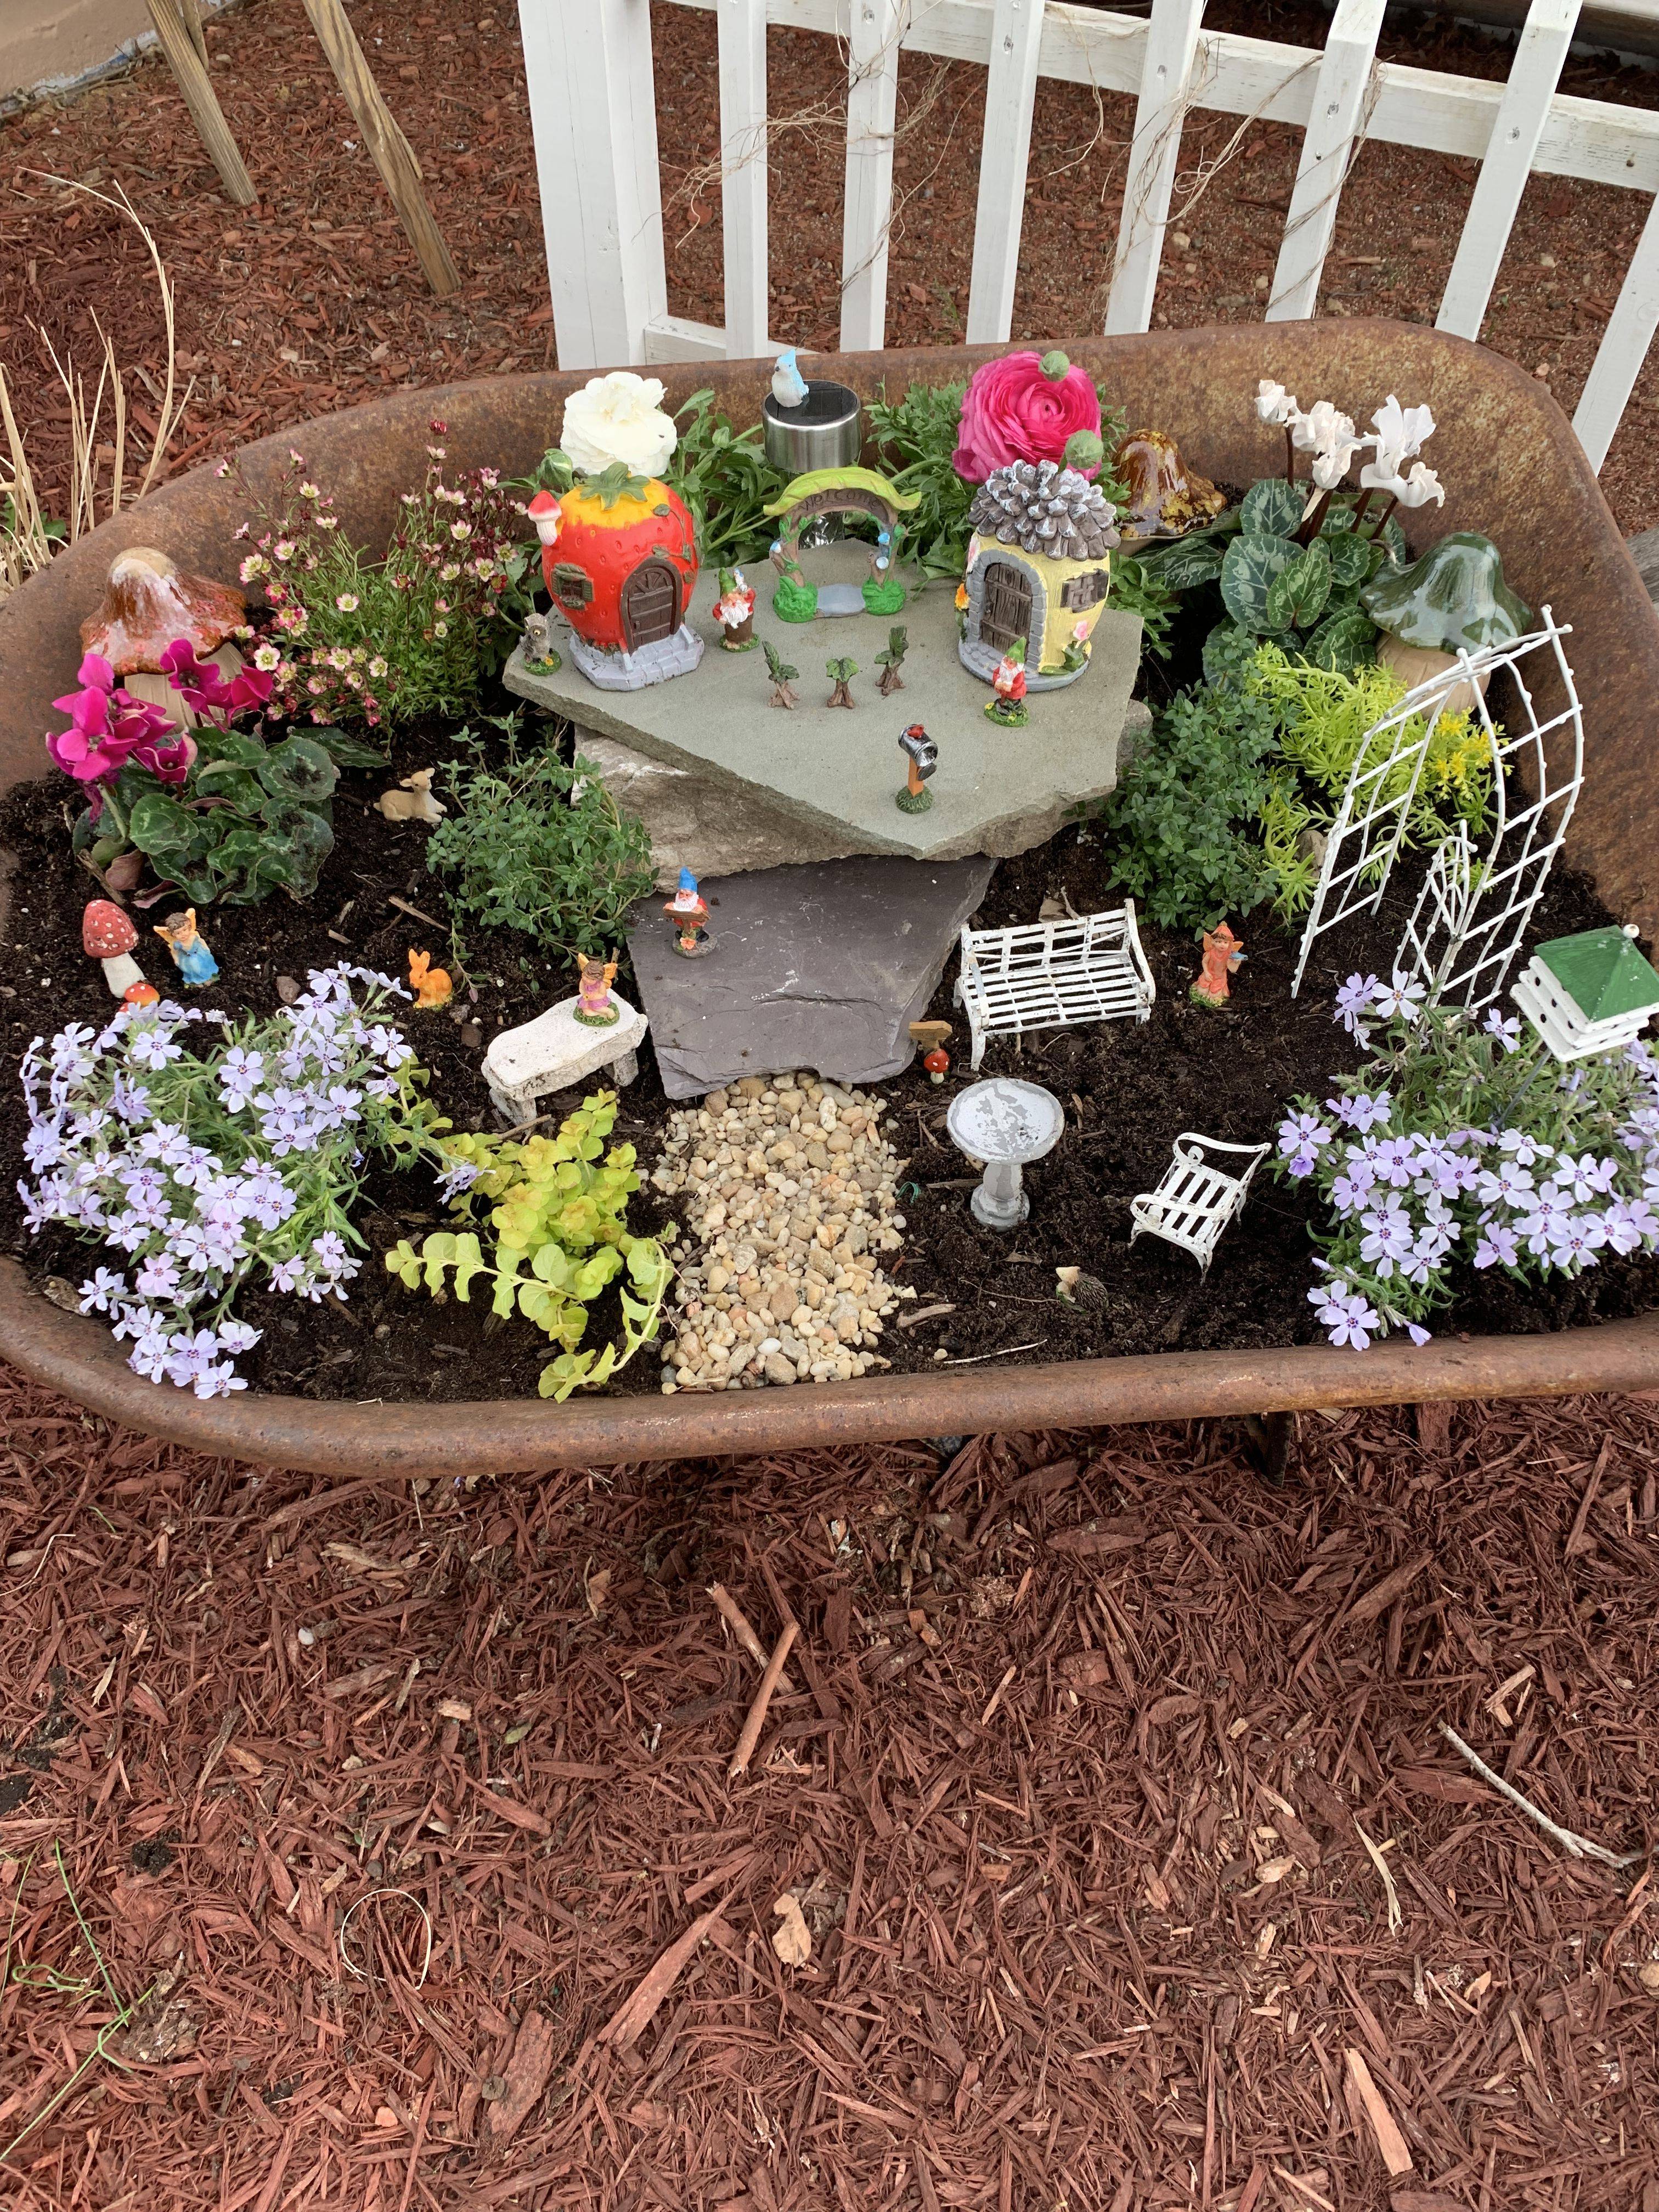 Wheelbarrow Fairy Garden Ideas Youll Love The Whoot